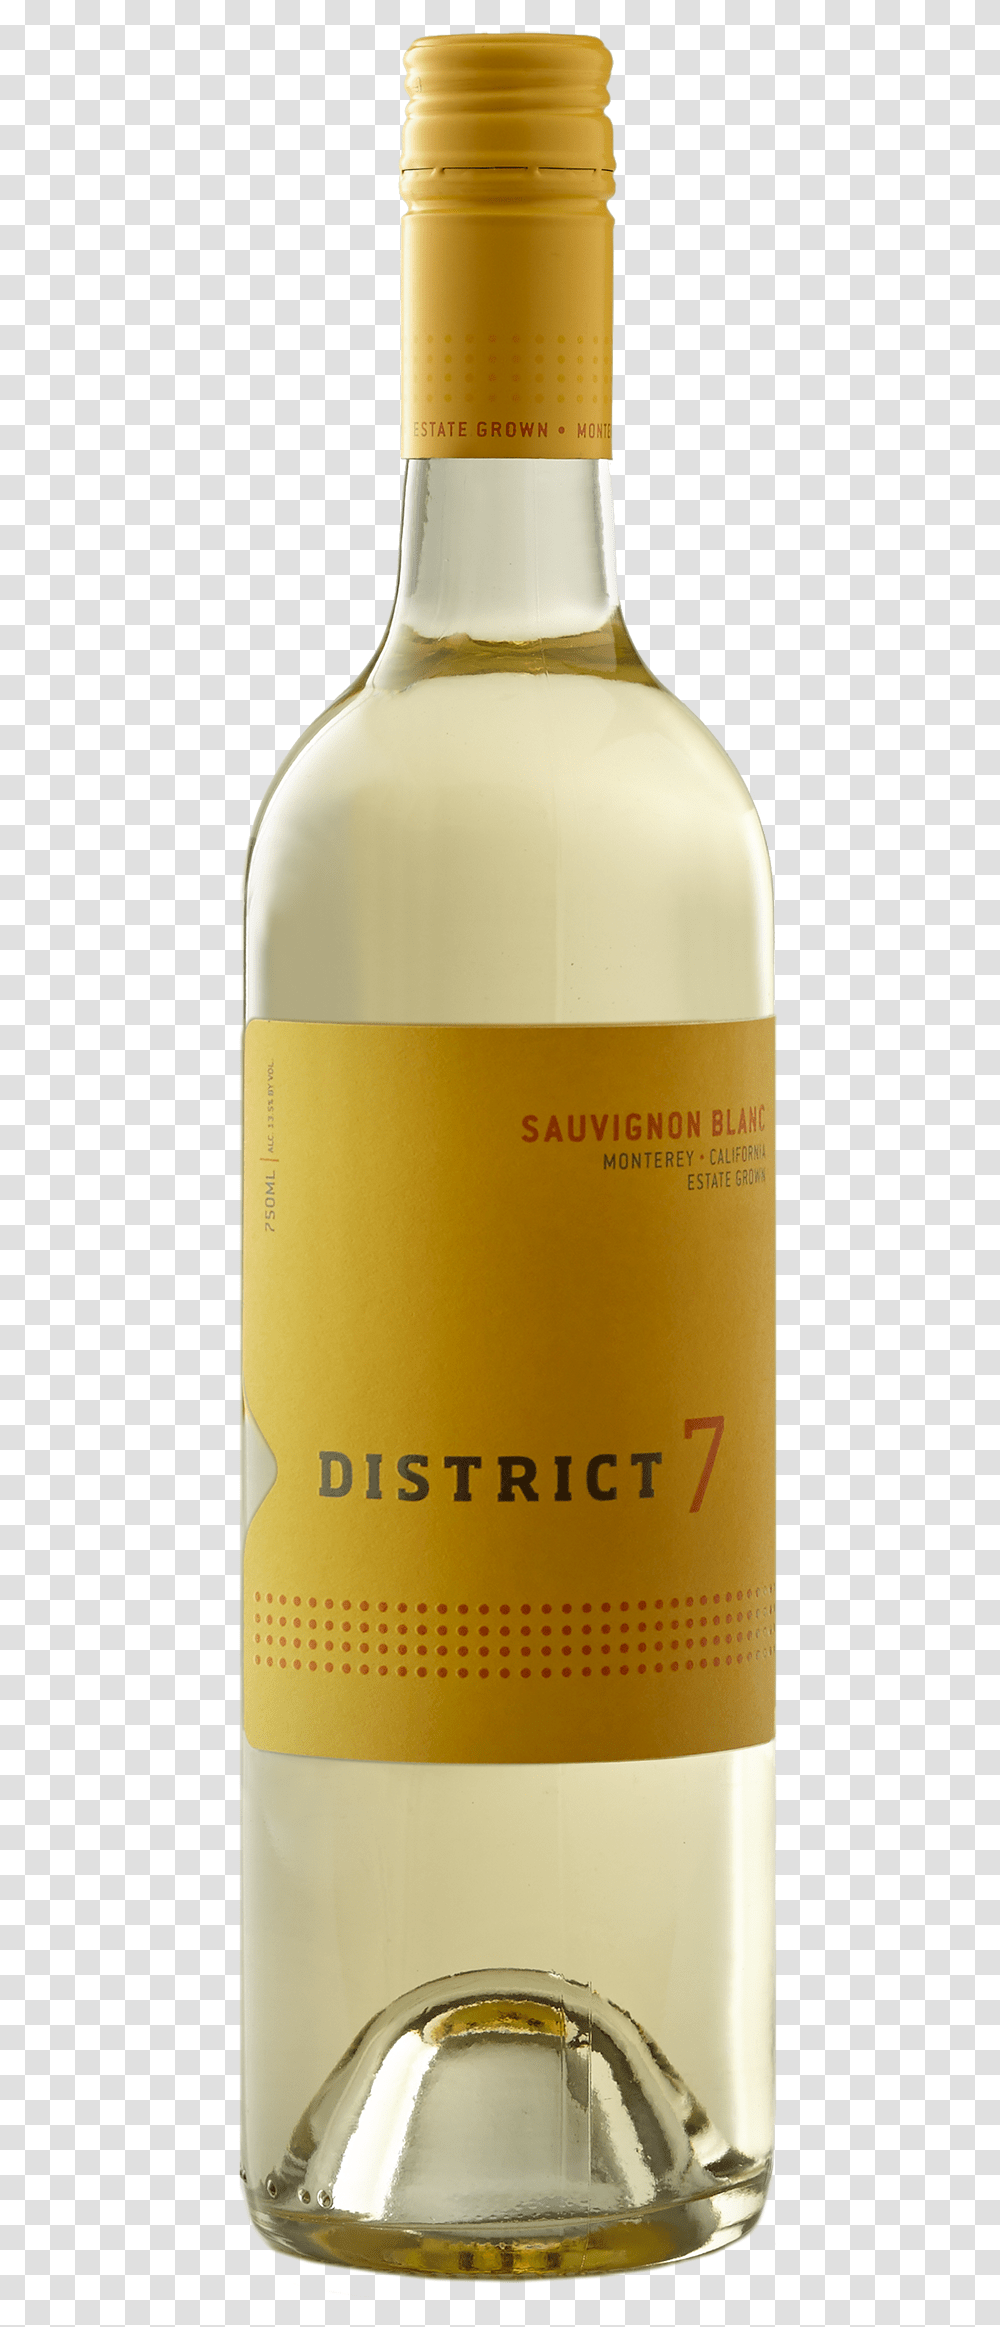 District 7 Sauvignon Blanc 2017, Bottle, Beer, Alcohol, Beverage Transparent Png